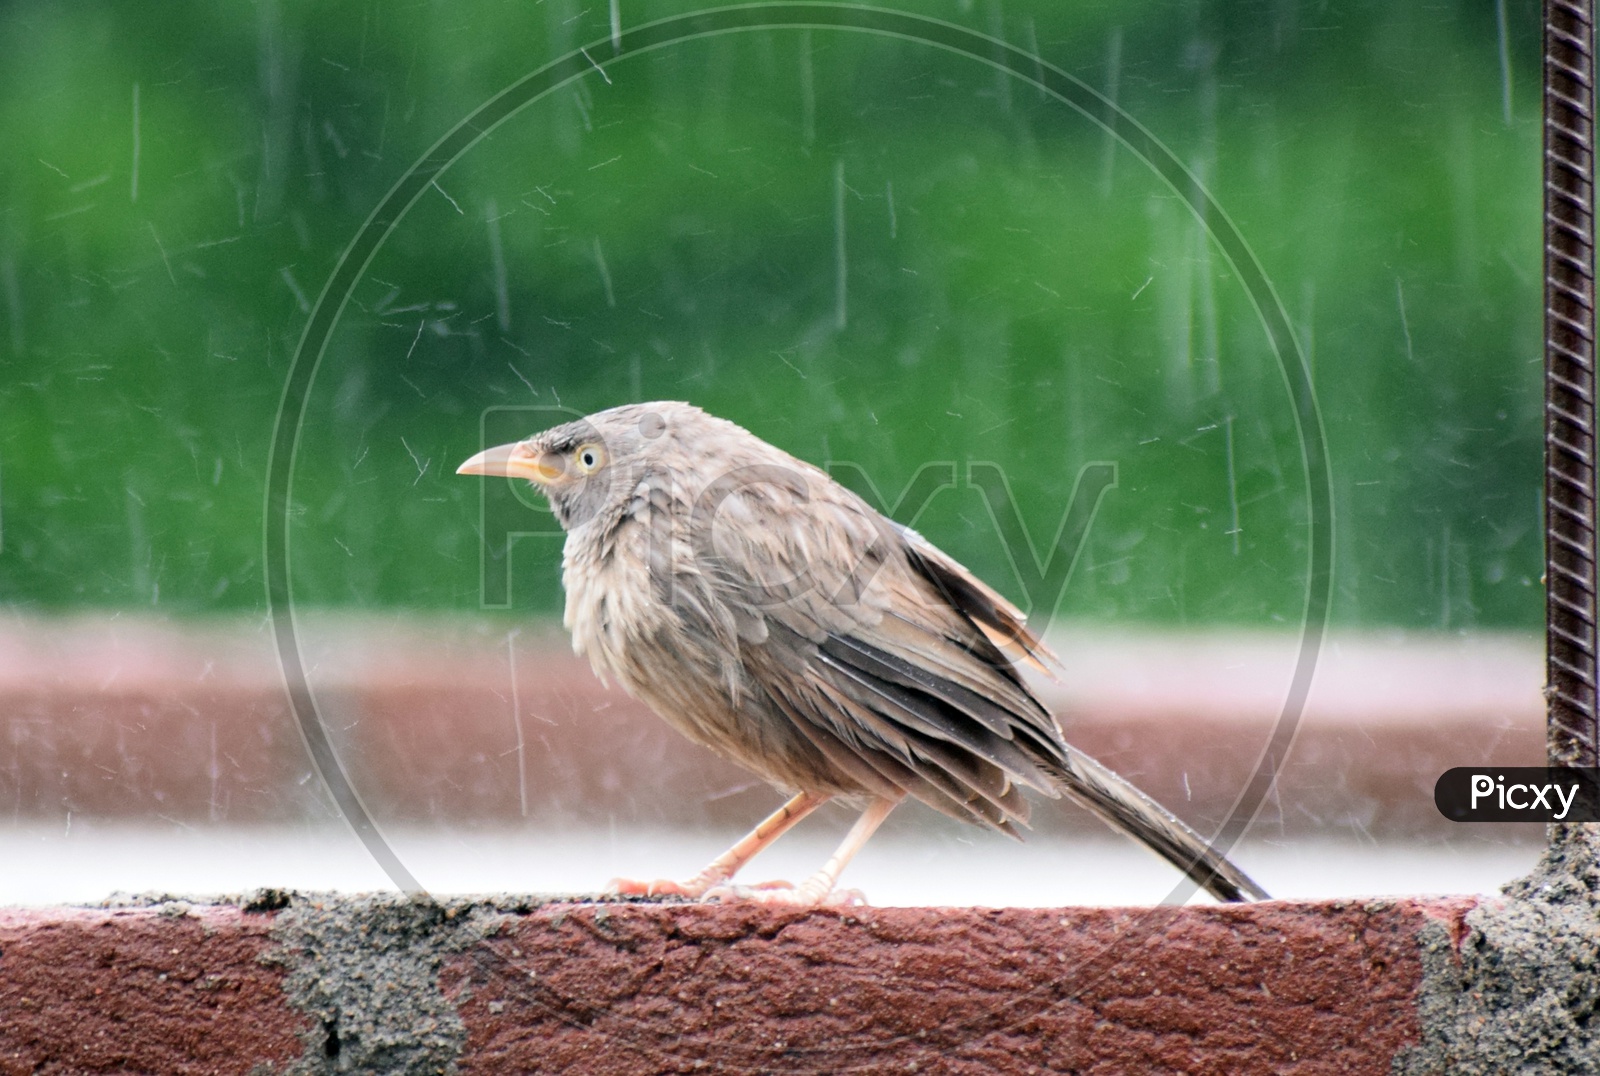 Angry bird getting wet in rain